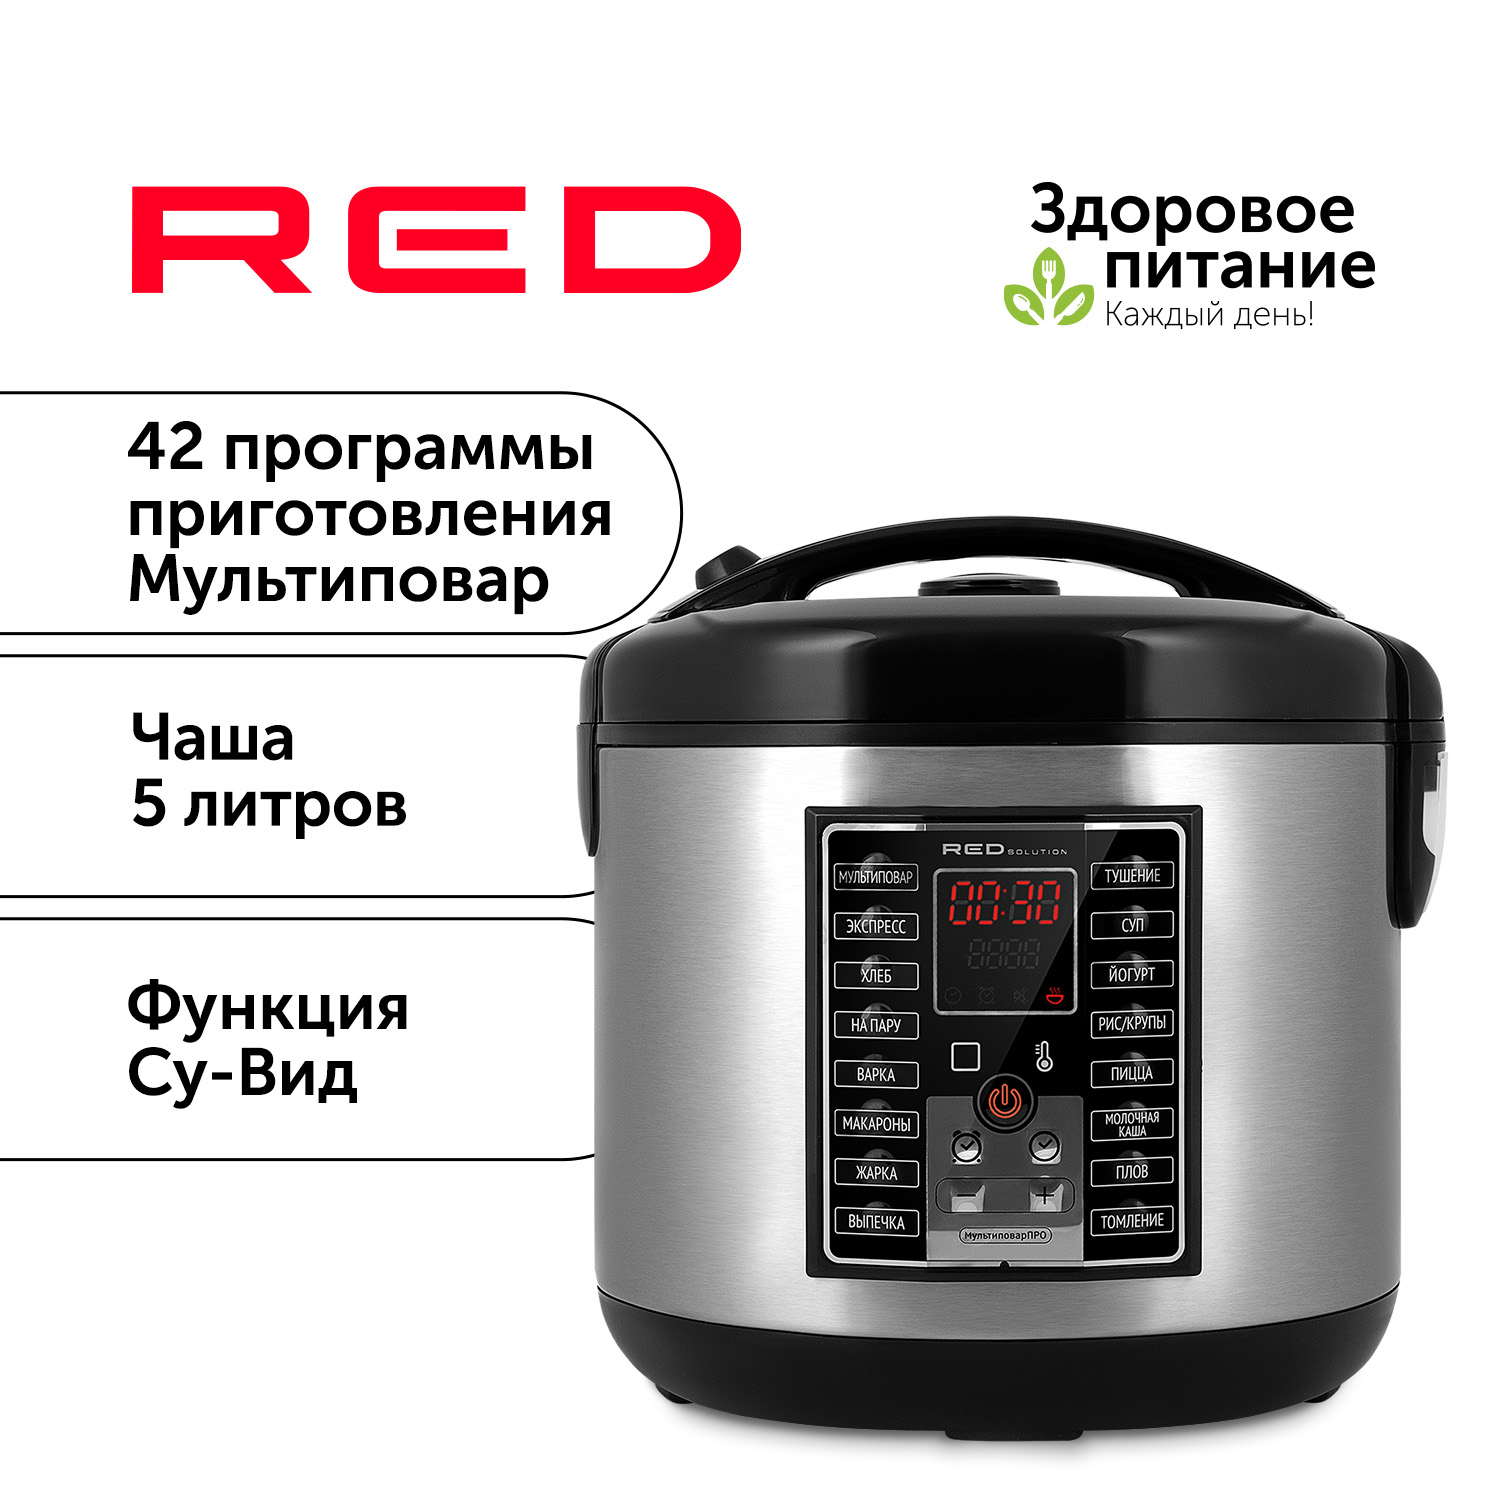 Мультиварка RED SOLUTION RMC-M25 серебристый, черный мультиварка red solution rmc m291 серая